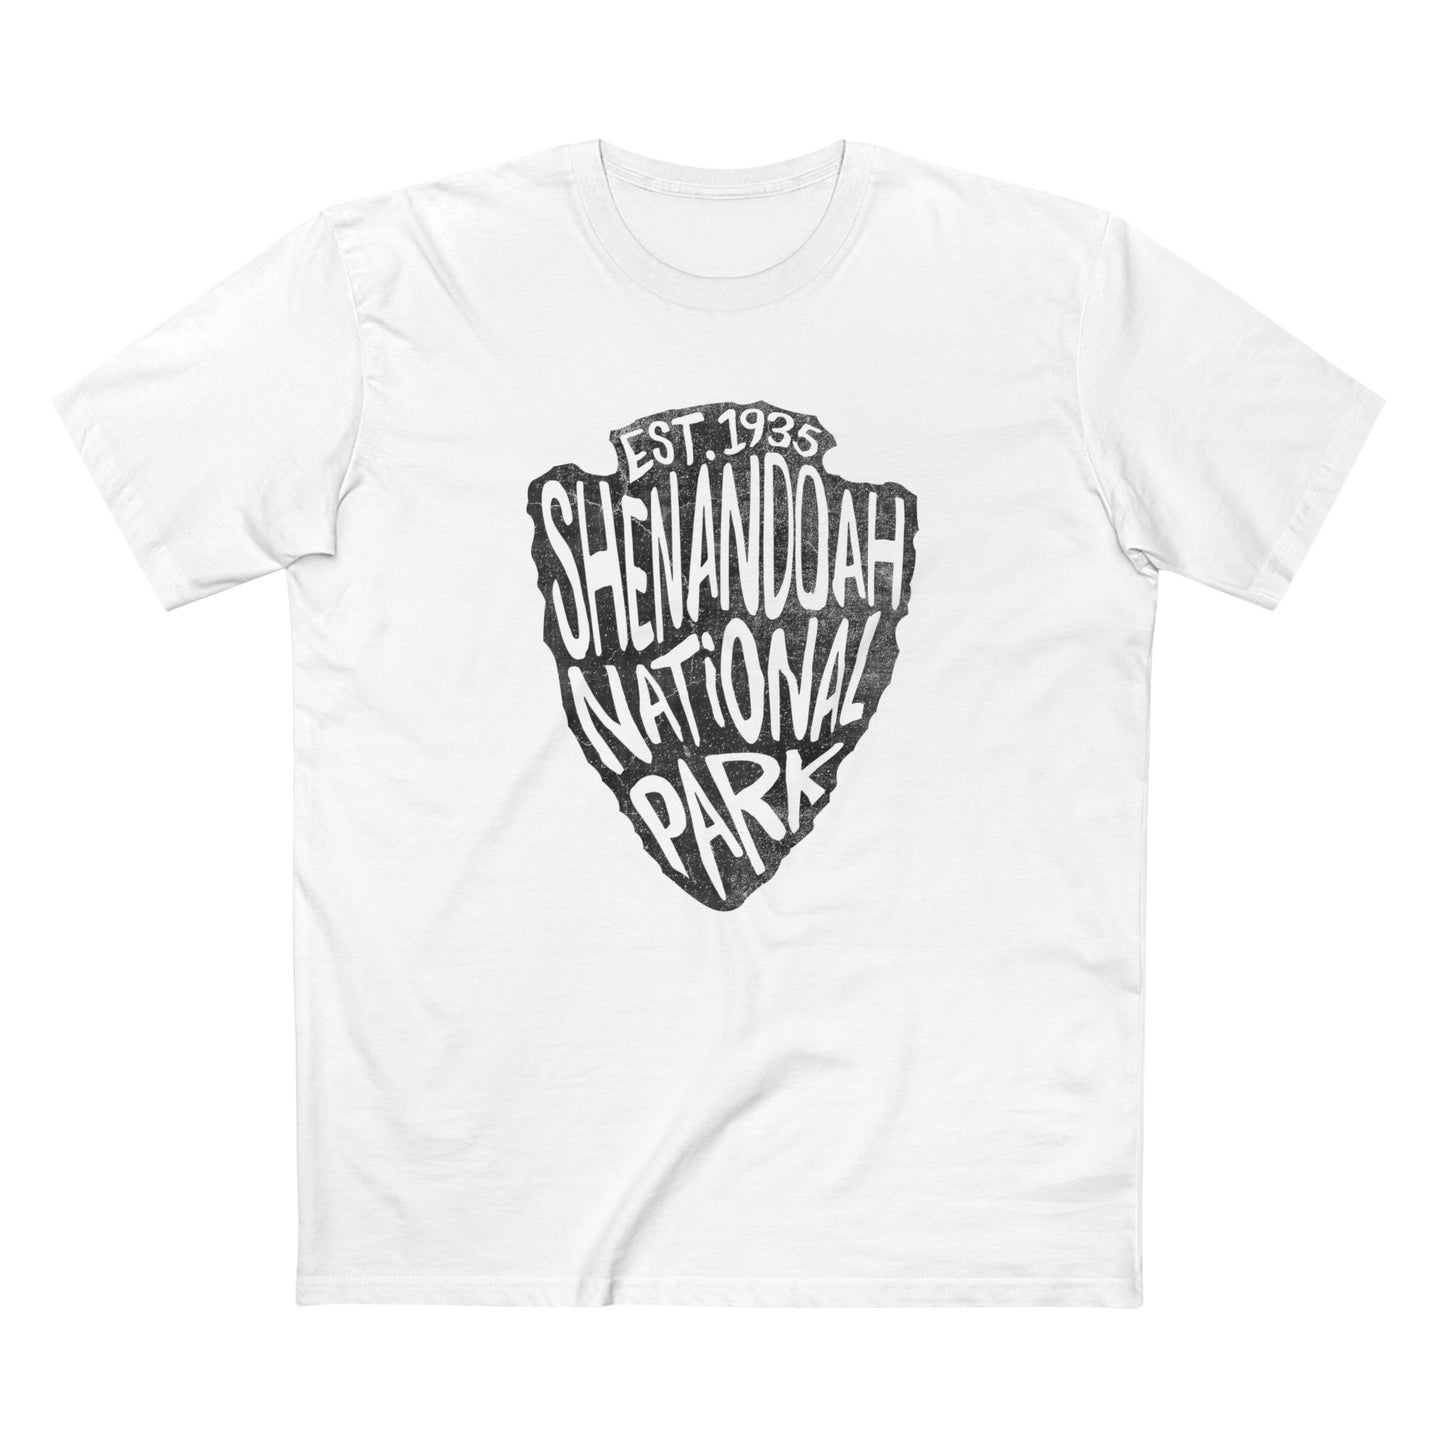 Shenandoah National Park T-Shirt - Arrowhead Design